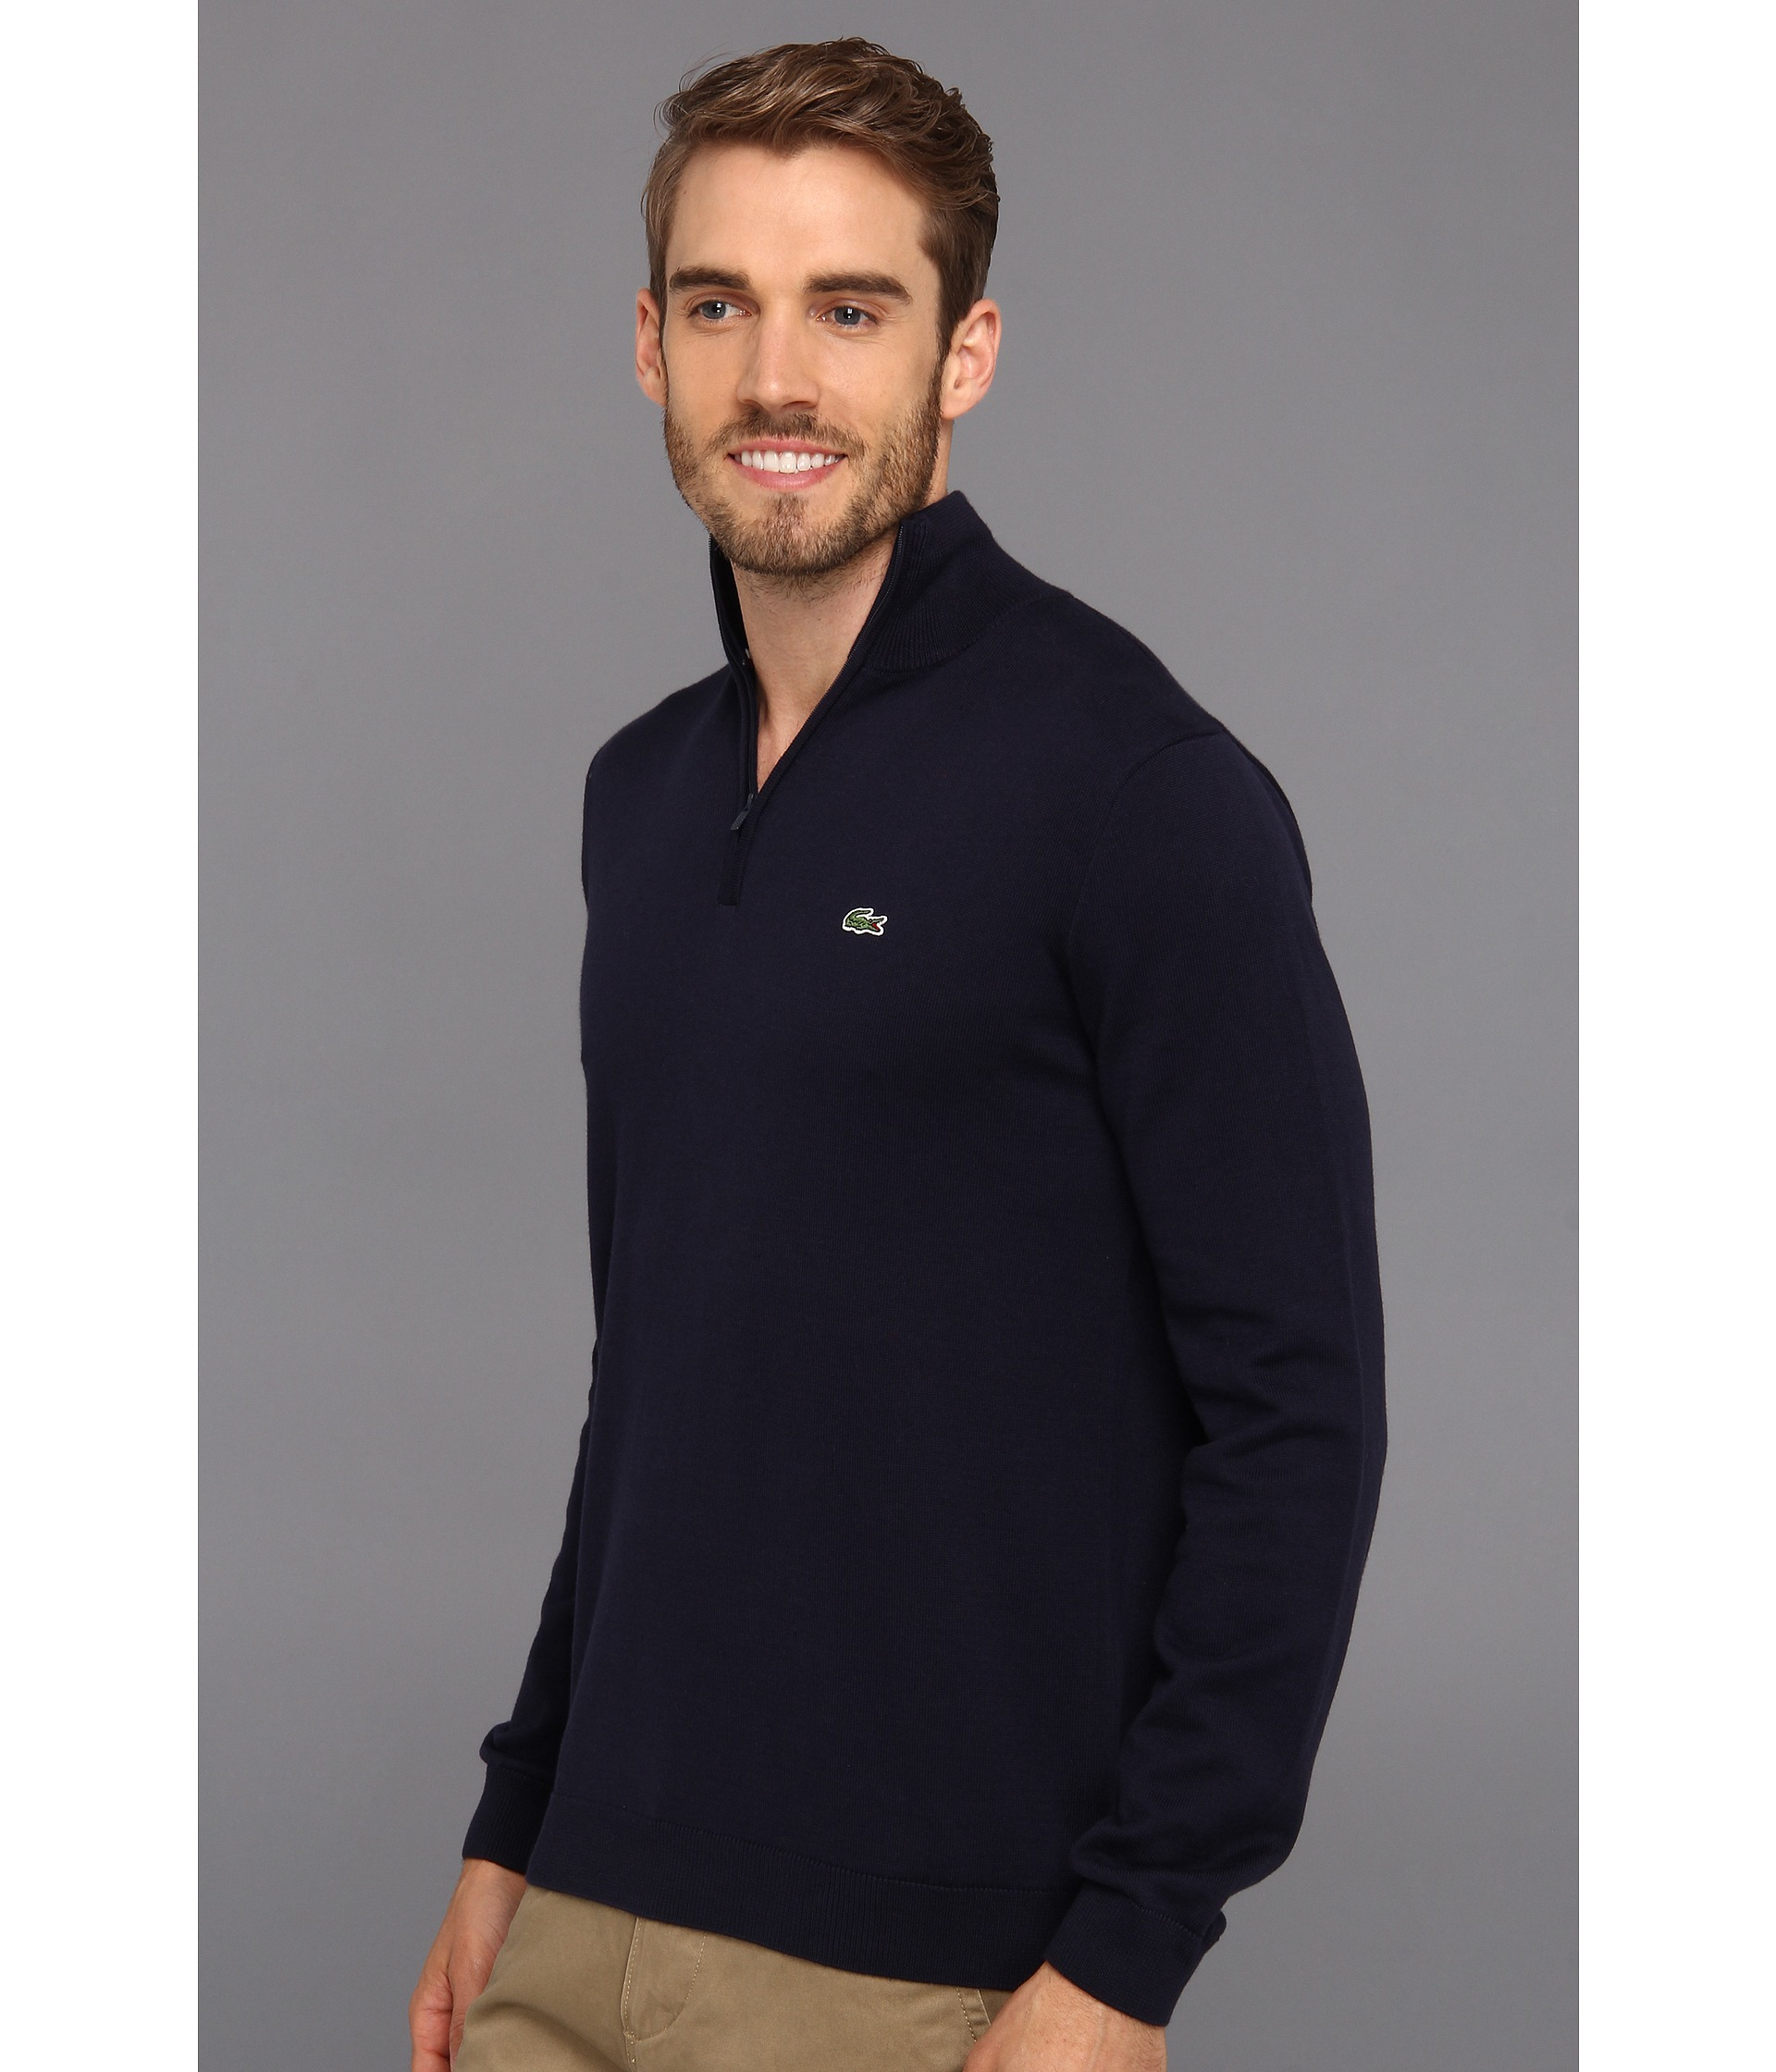 Lyst - Lacoste Half Zip Cotton Jersey Sweater in Blue for Men